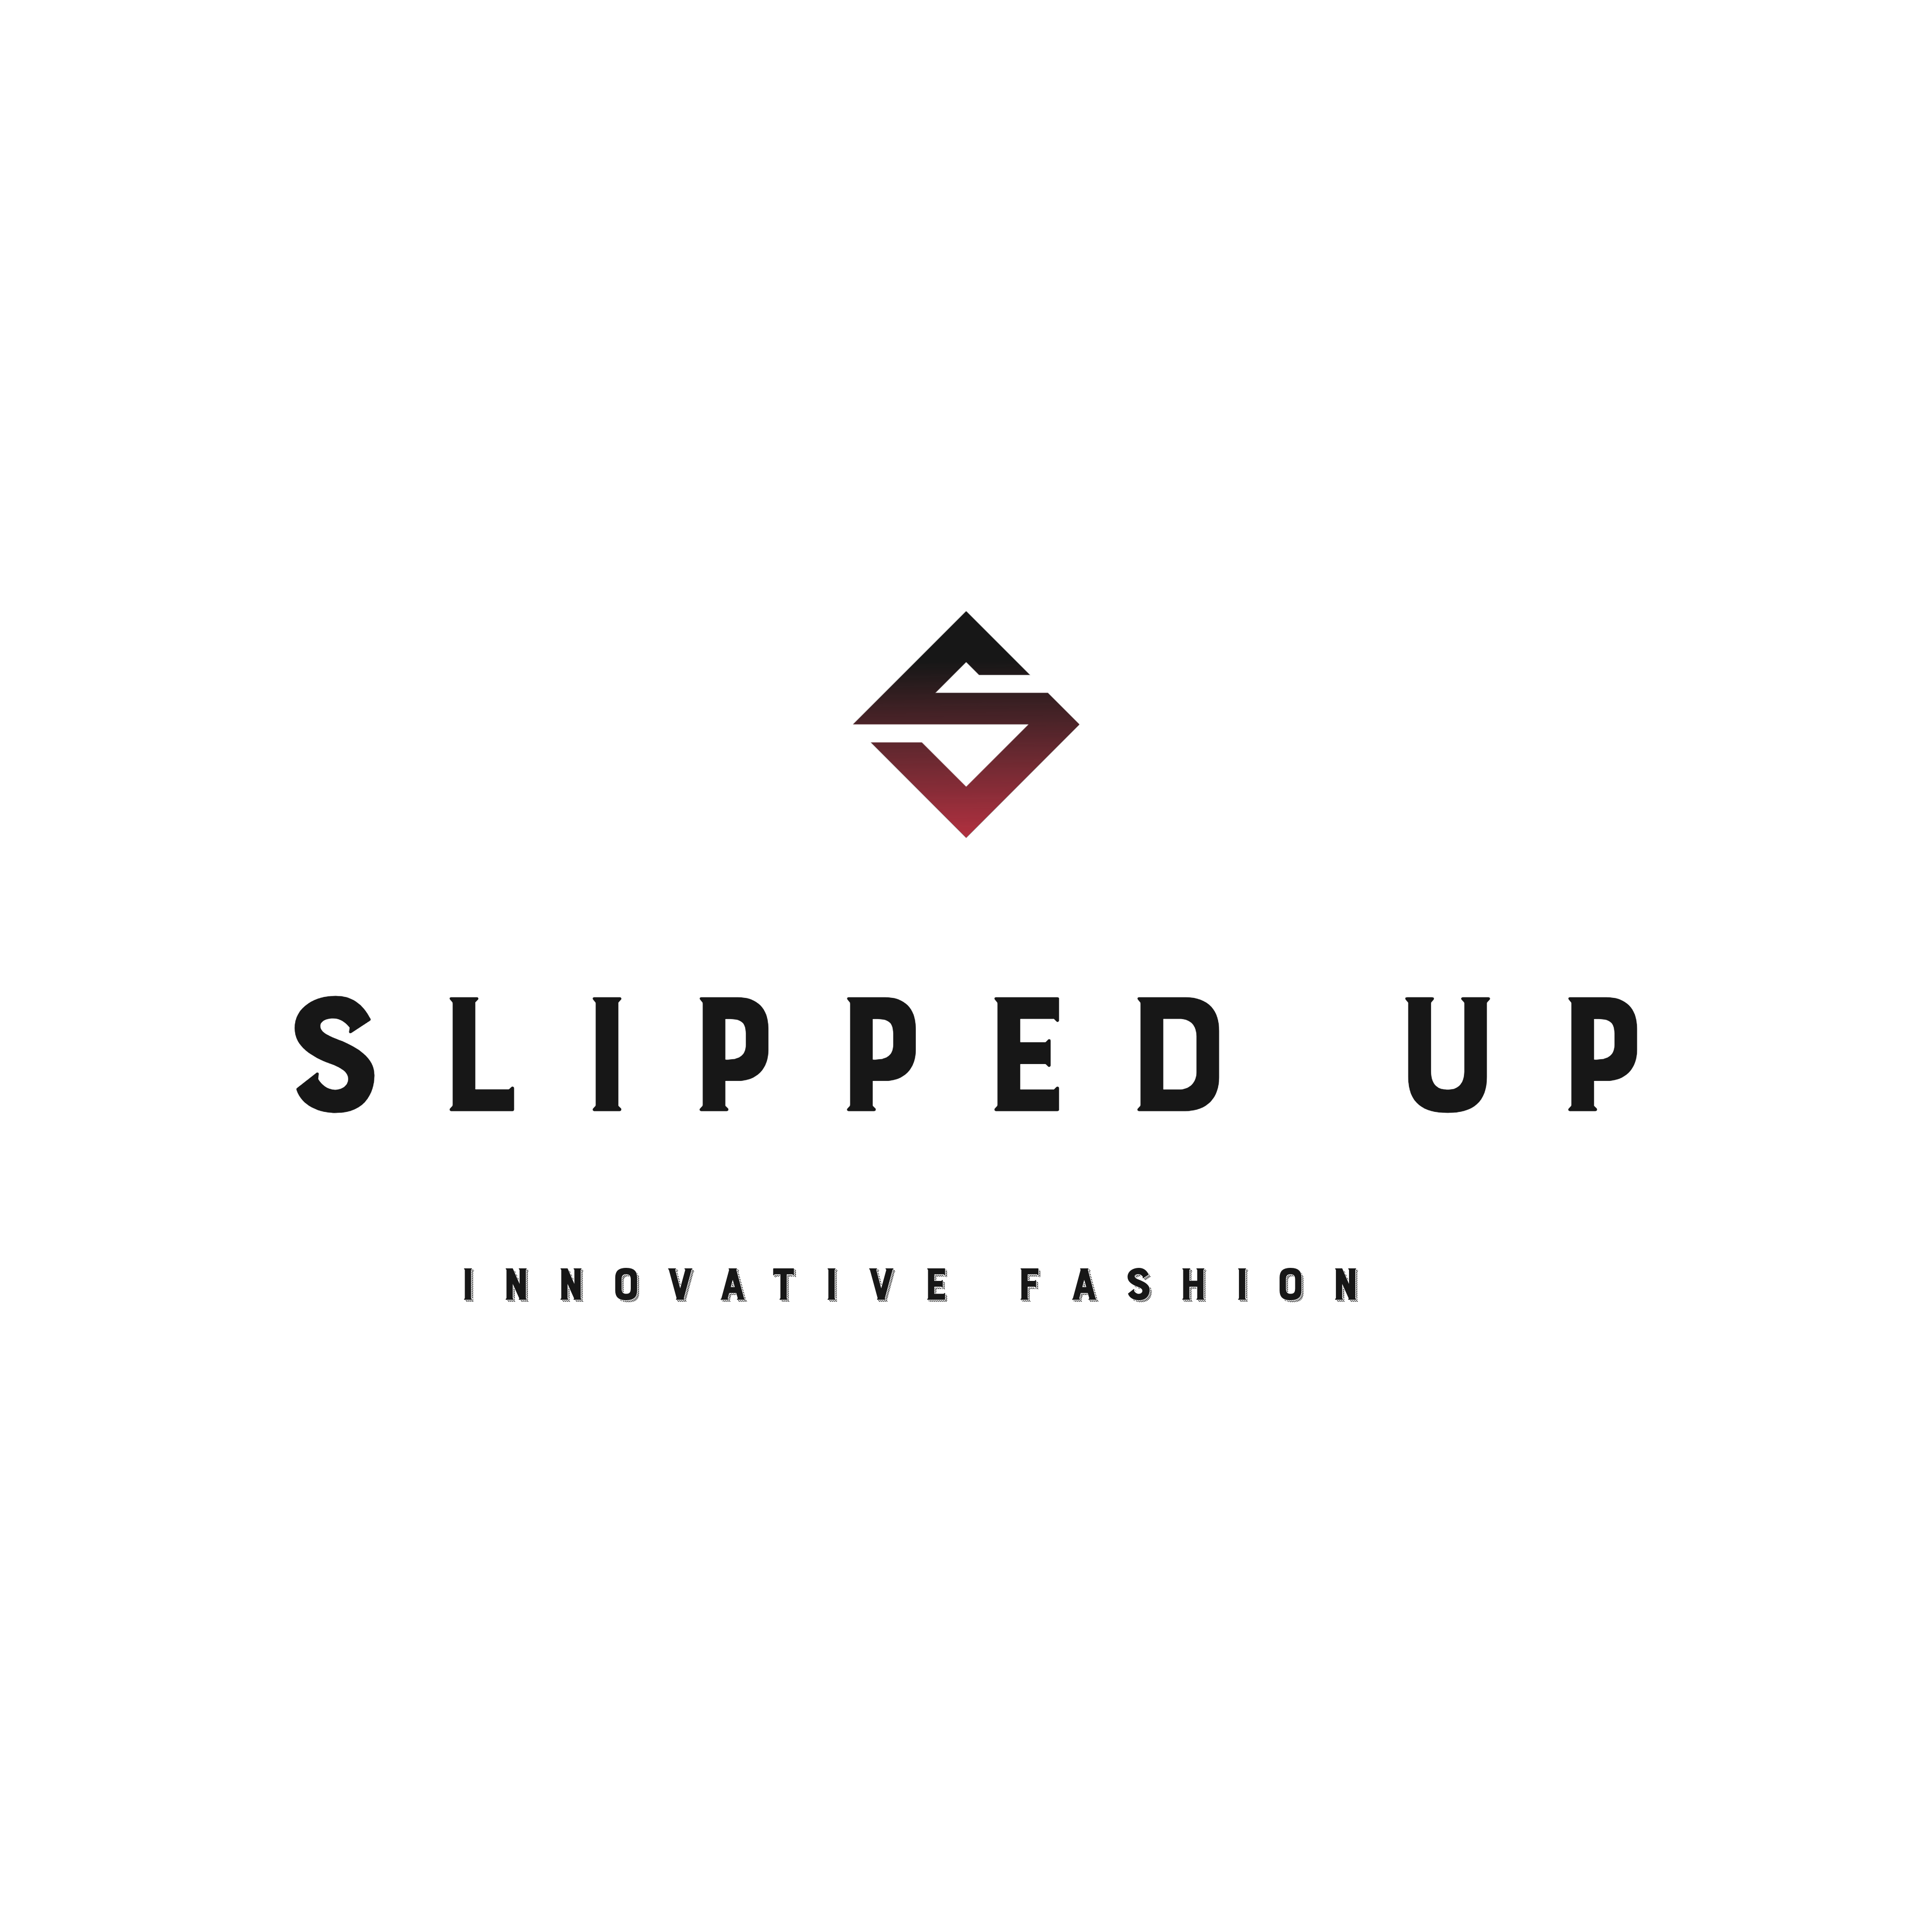 Slipped Up